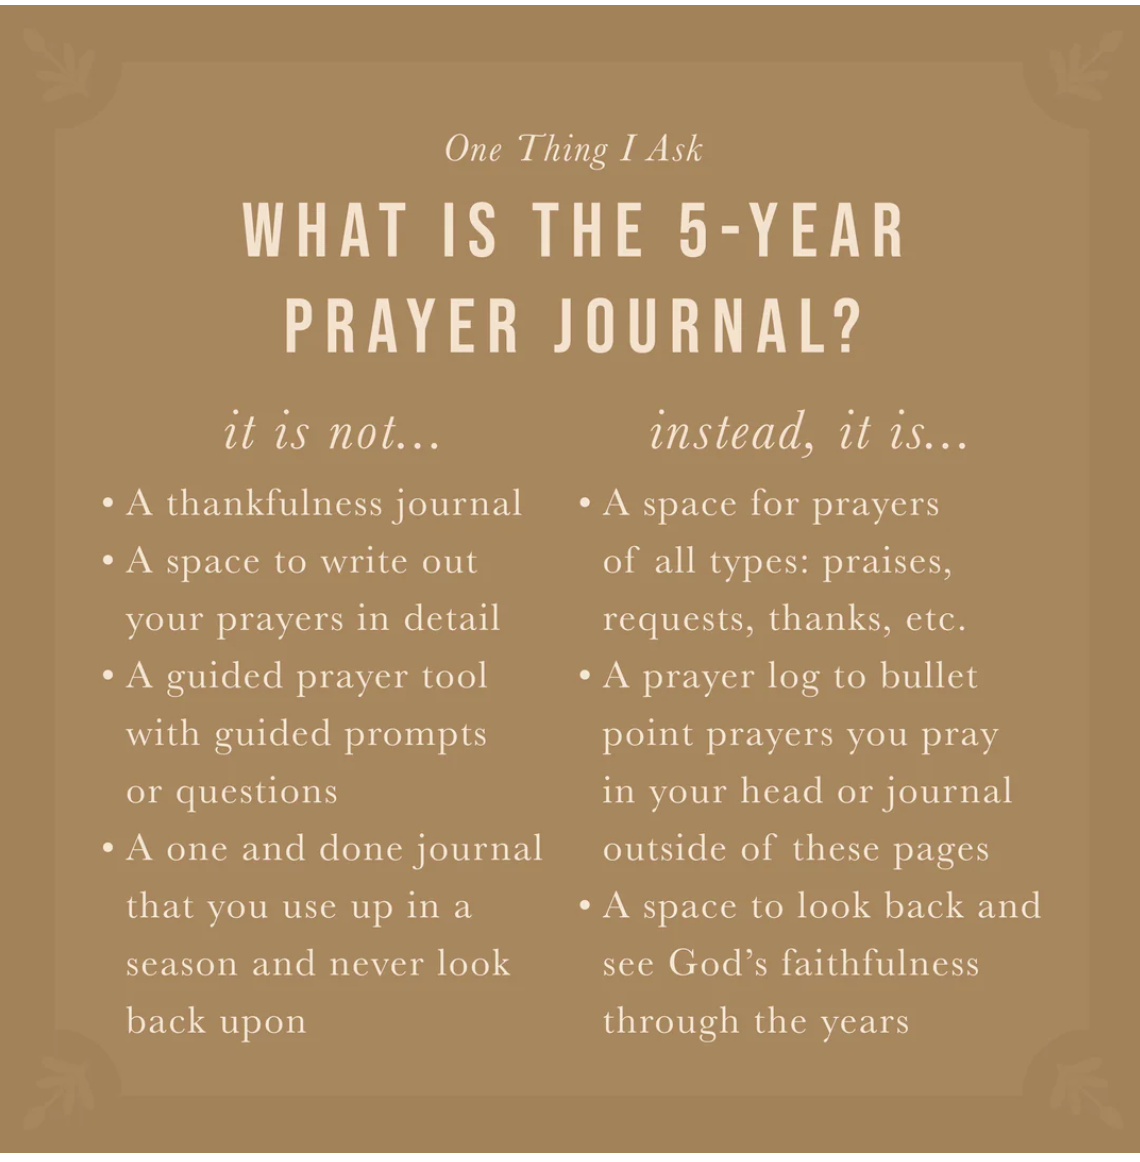 Edinburgh Theme One Thing I Ask 5-Year Prayer Journal